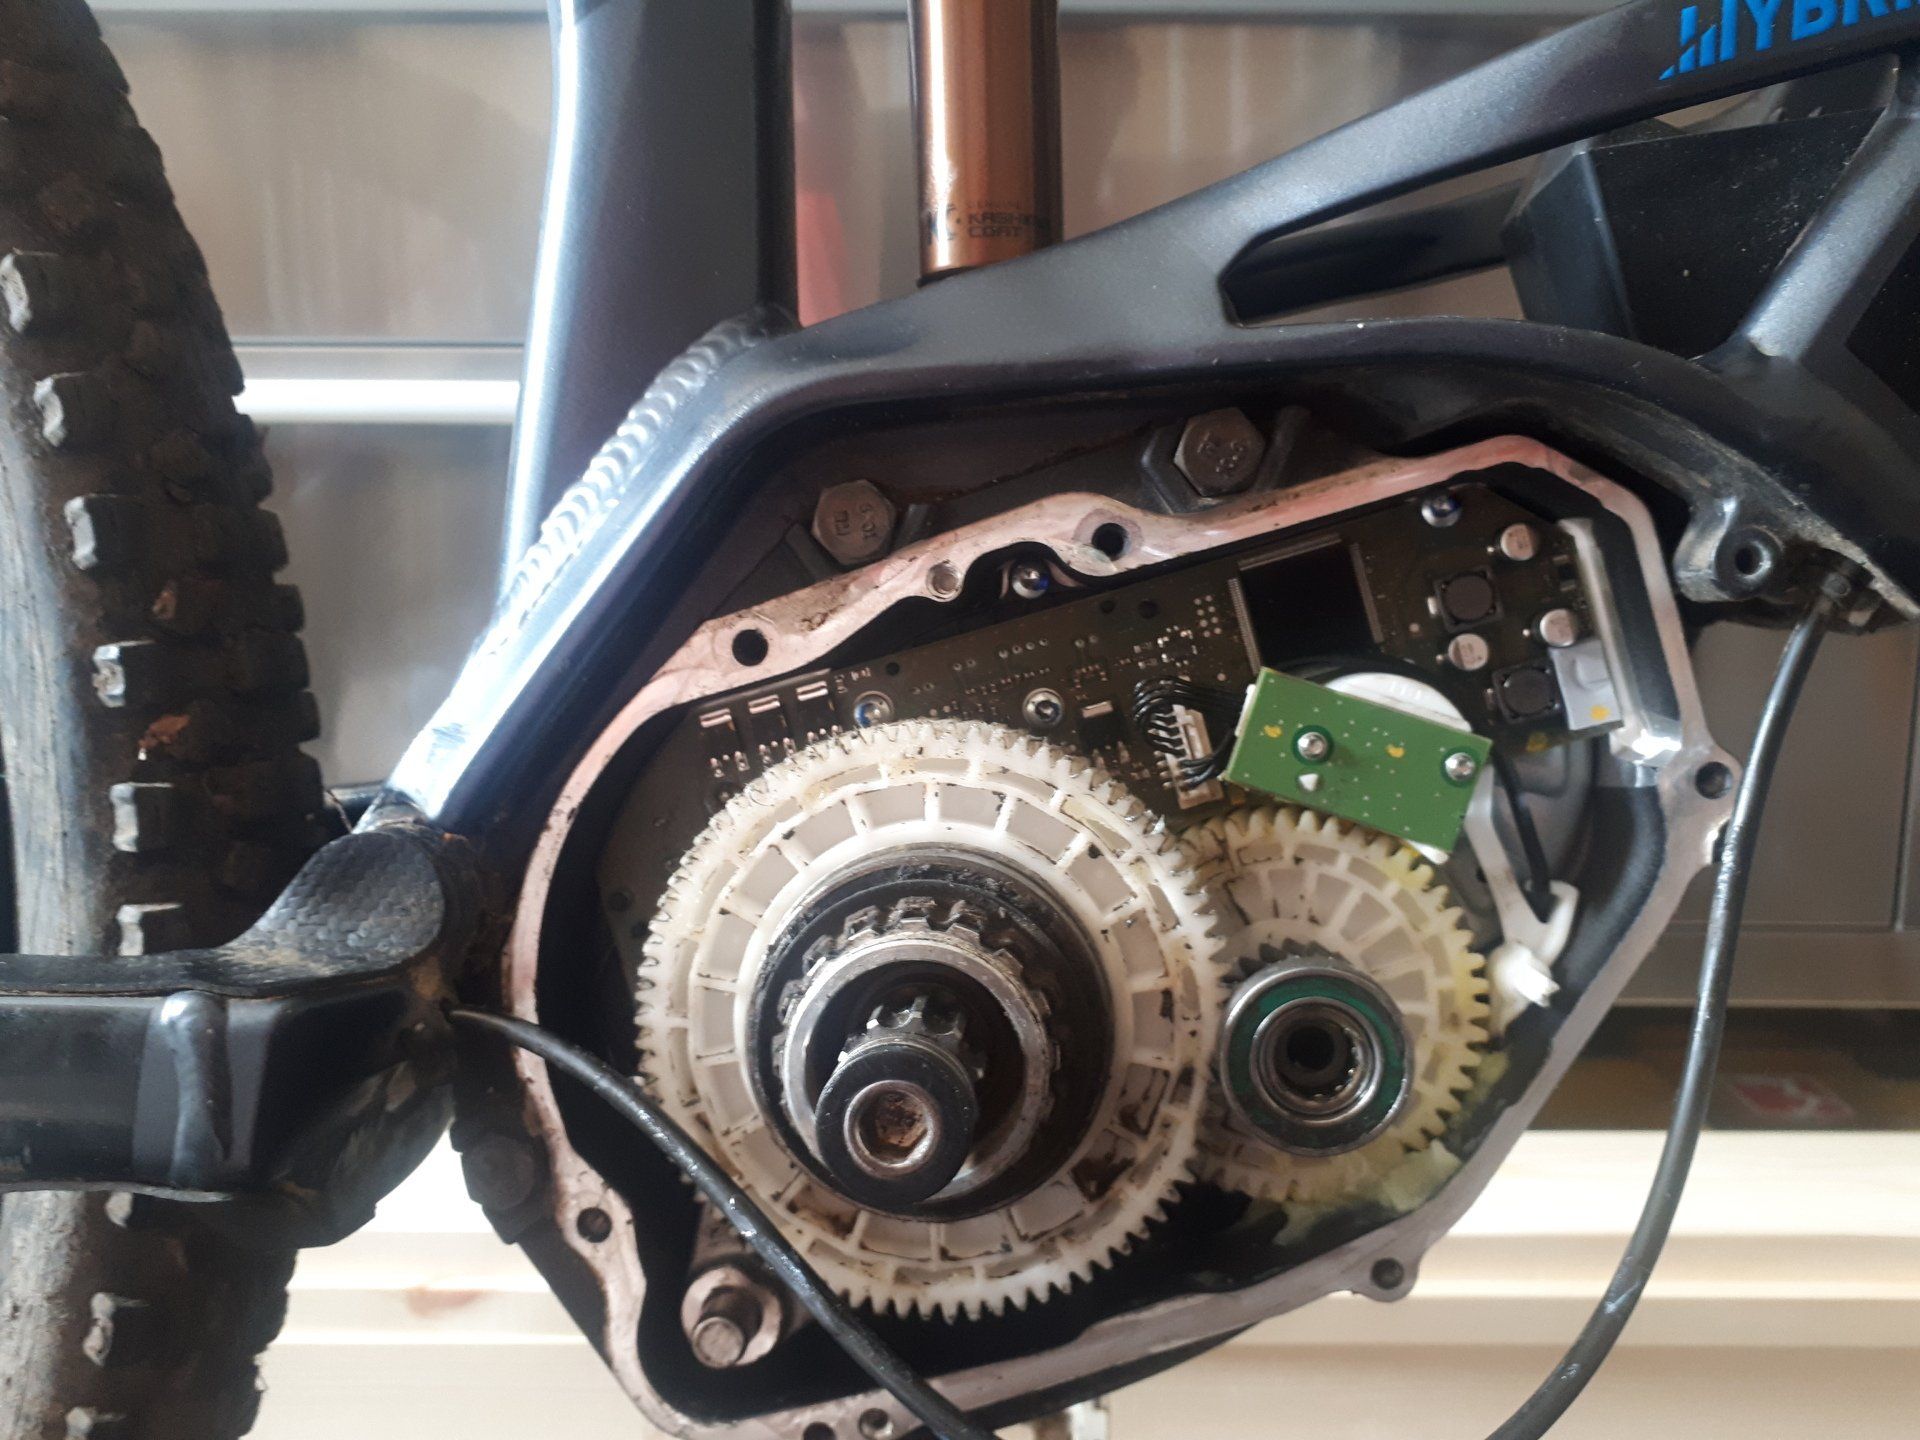 Bosch e-bike motor bearing repair